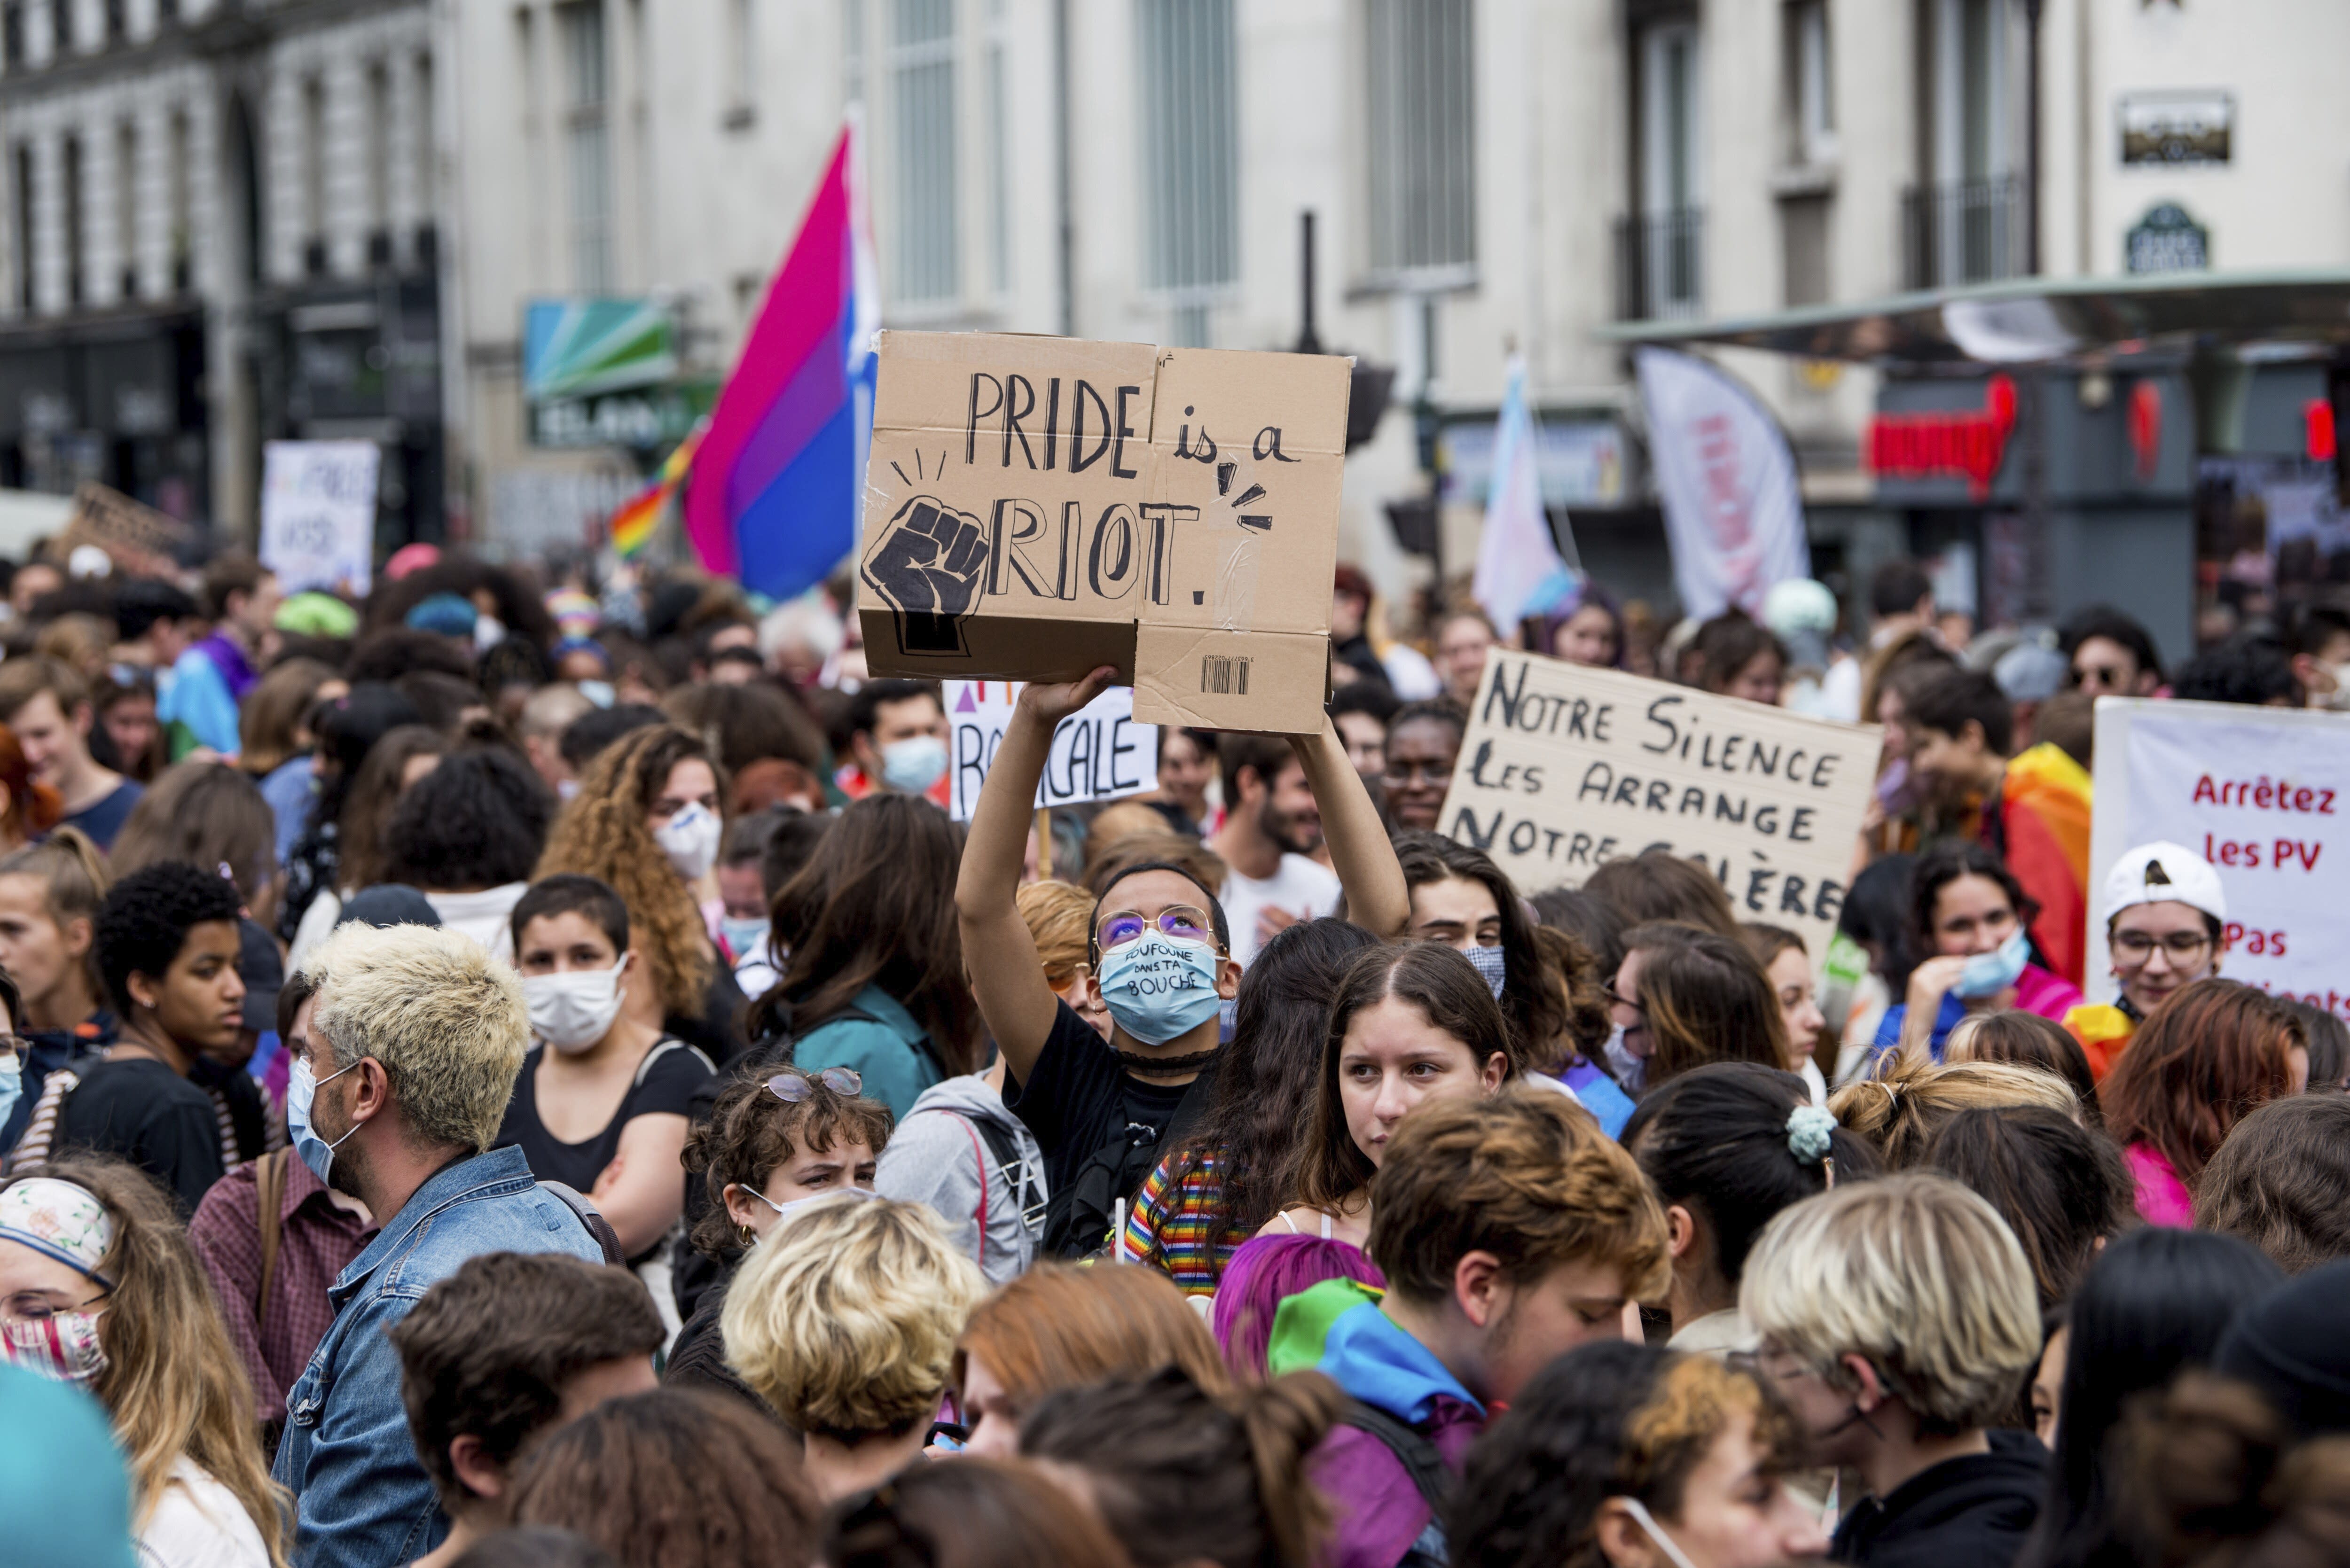 At Pride march in Paris, activists demand racial justice too